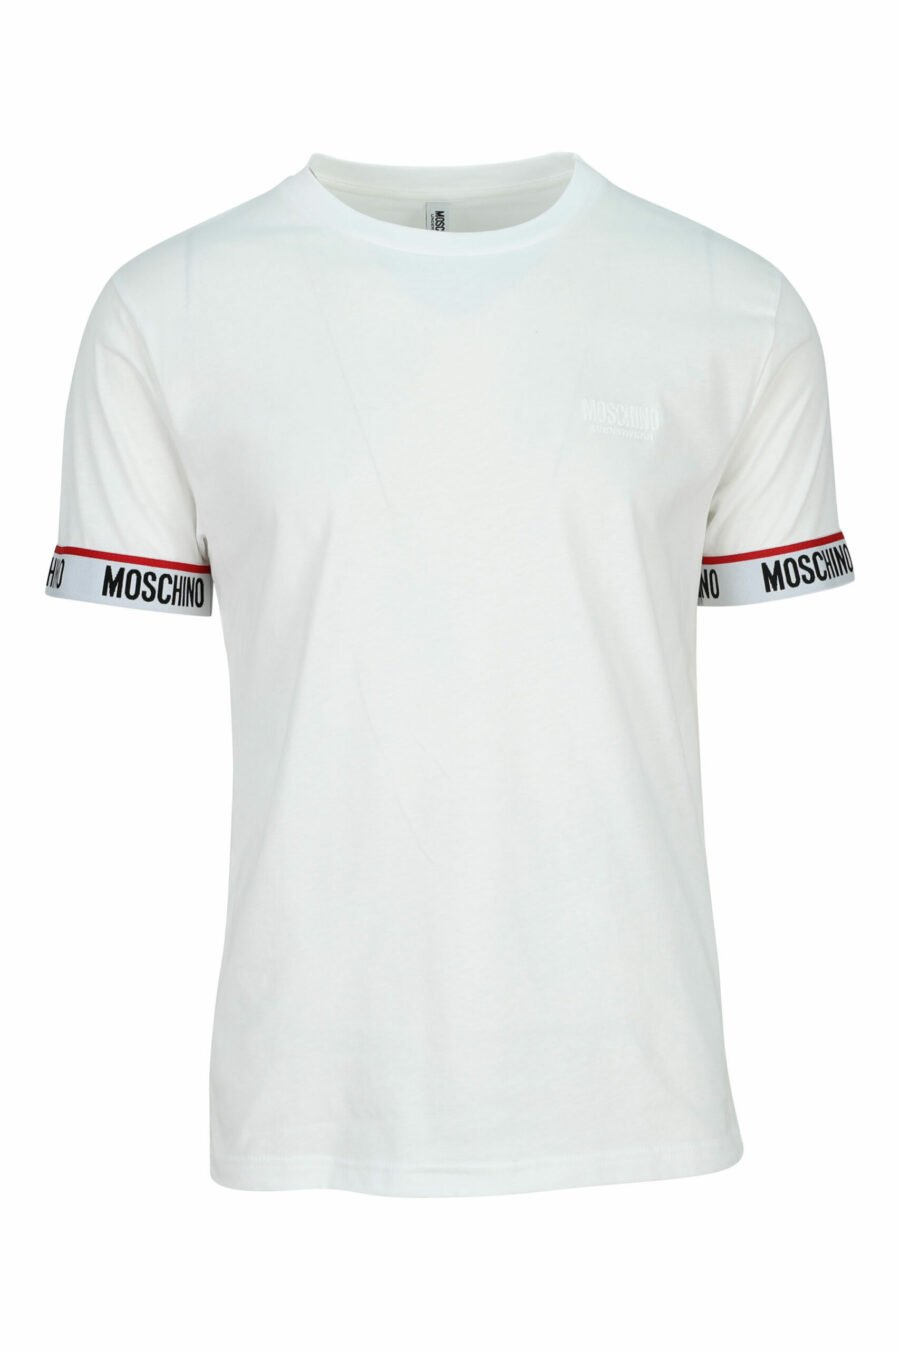 T-shirt branca com logótipo branco nas mangas - 667113604565 scaled